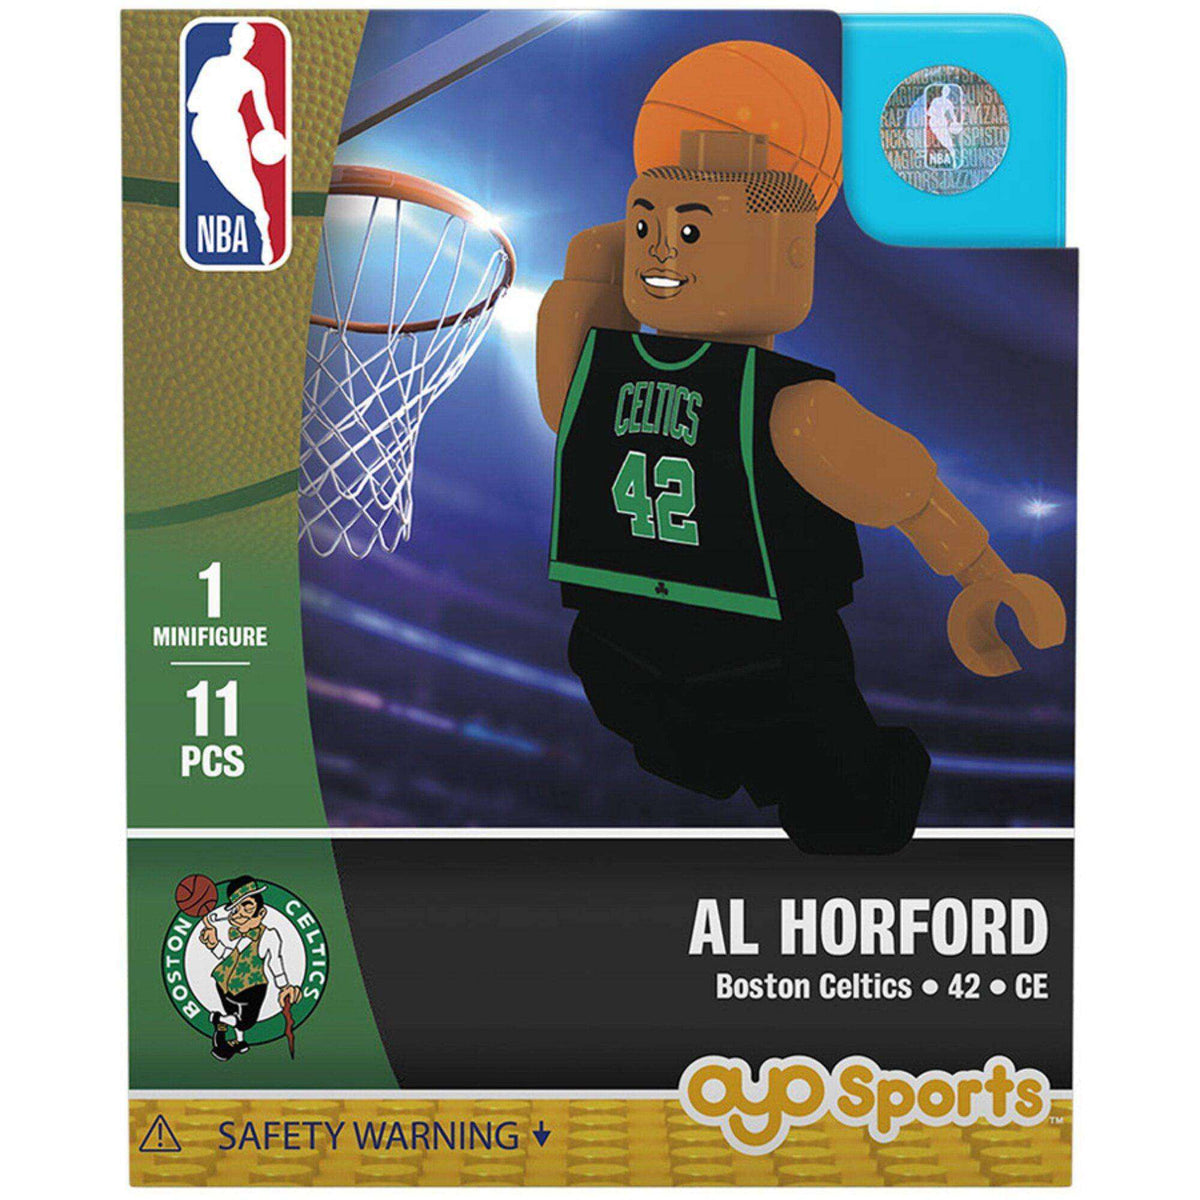 Al Horford 42 Boston Celtics basketball player poster shirt